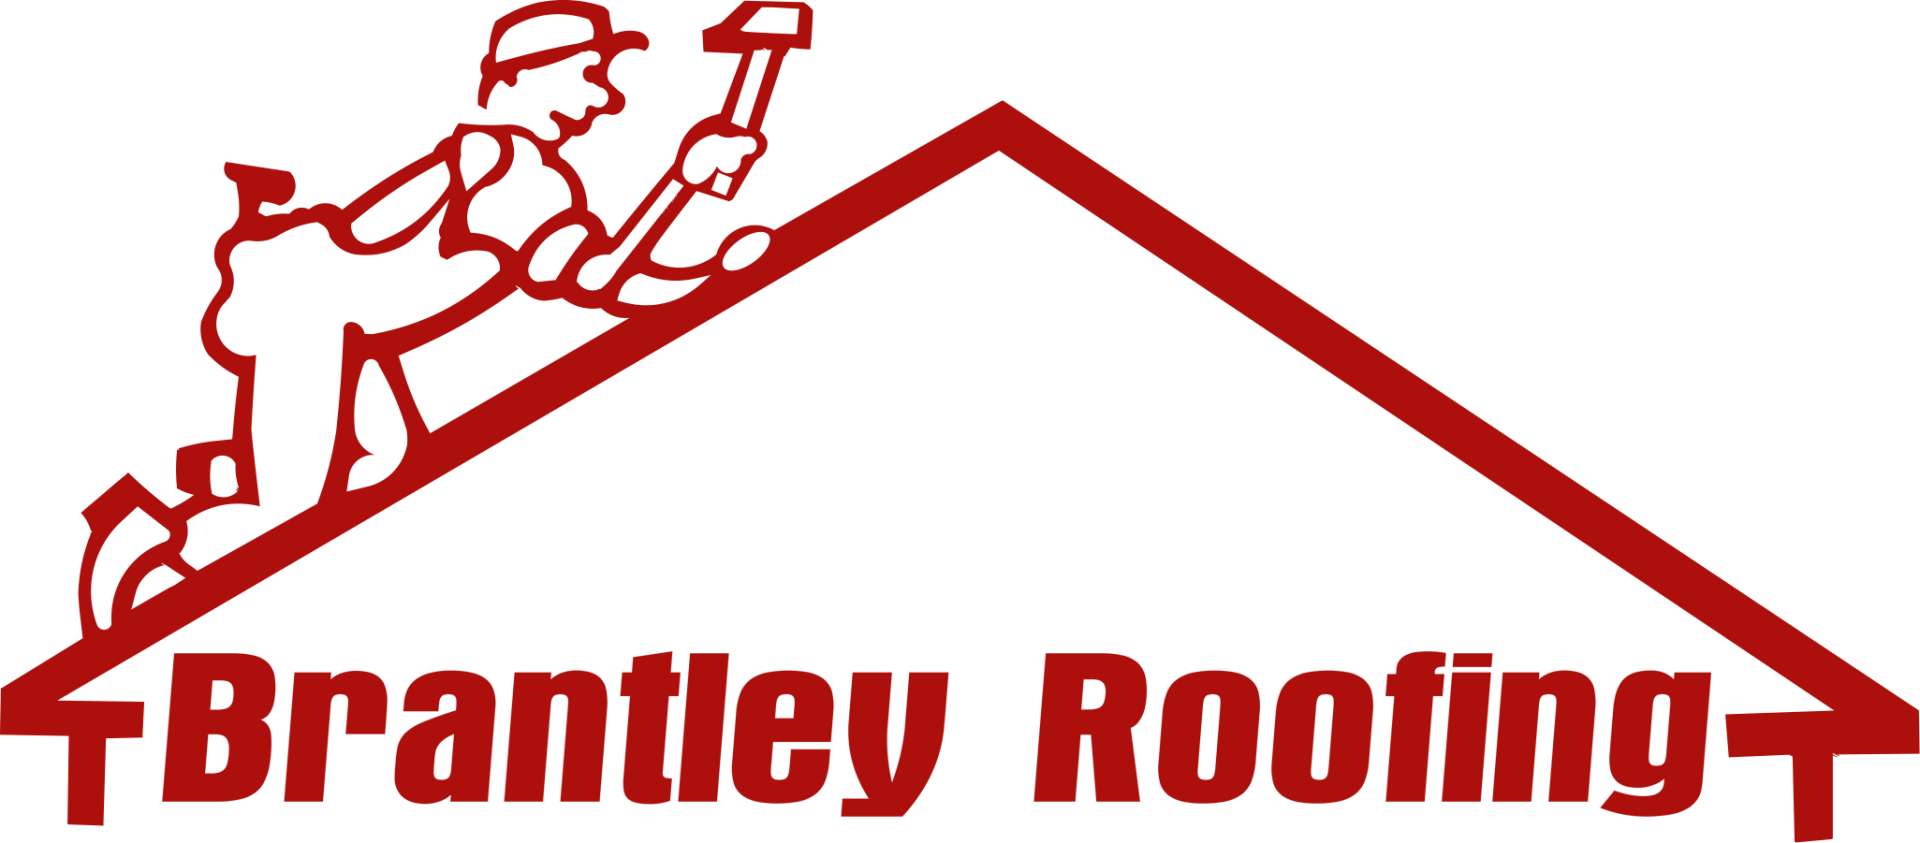 Brantley Roofing Co Inc - Logo